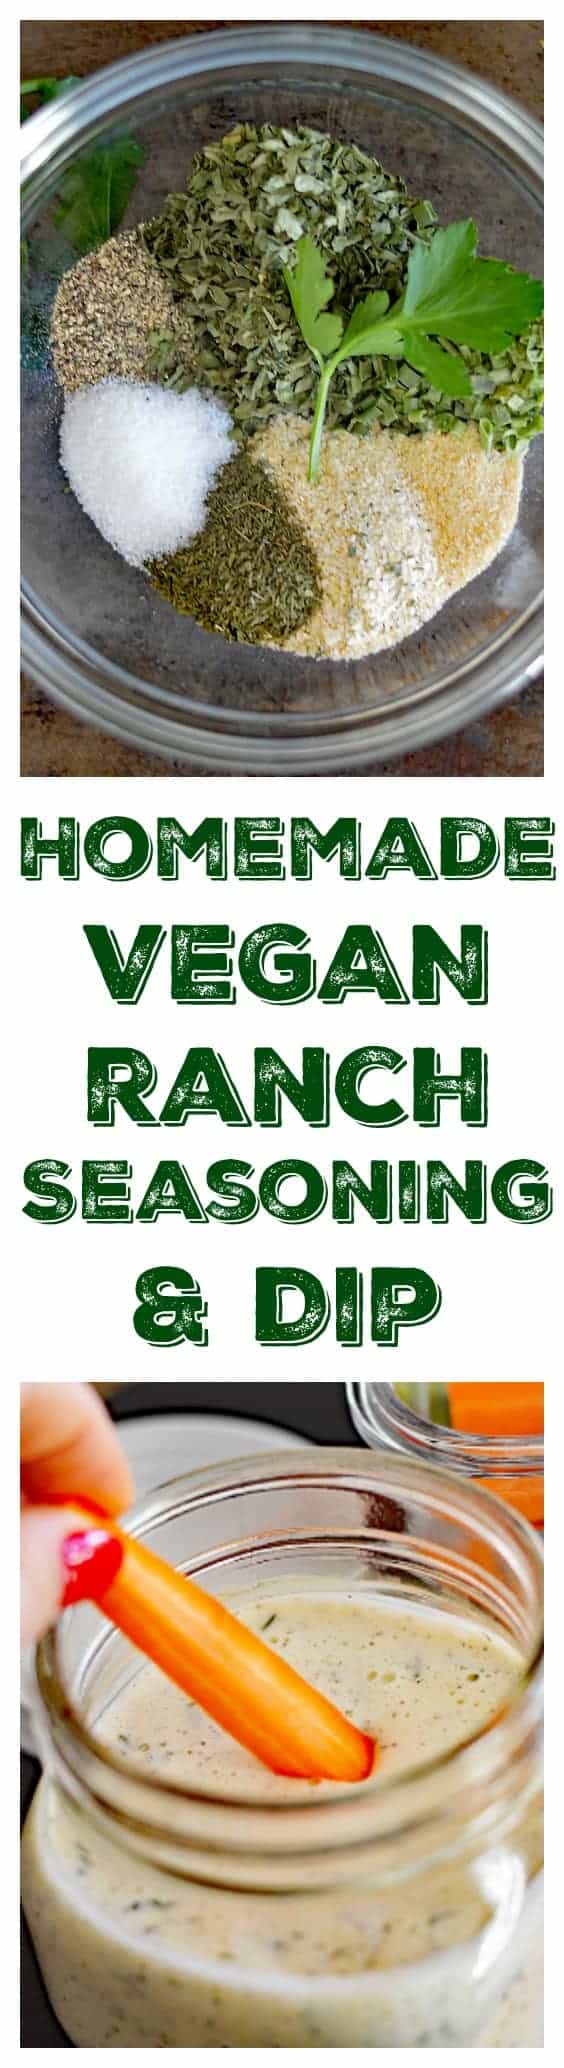 Homemade Ranch Seasoning